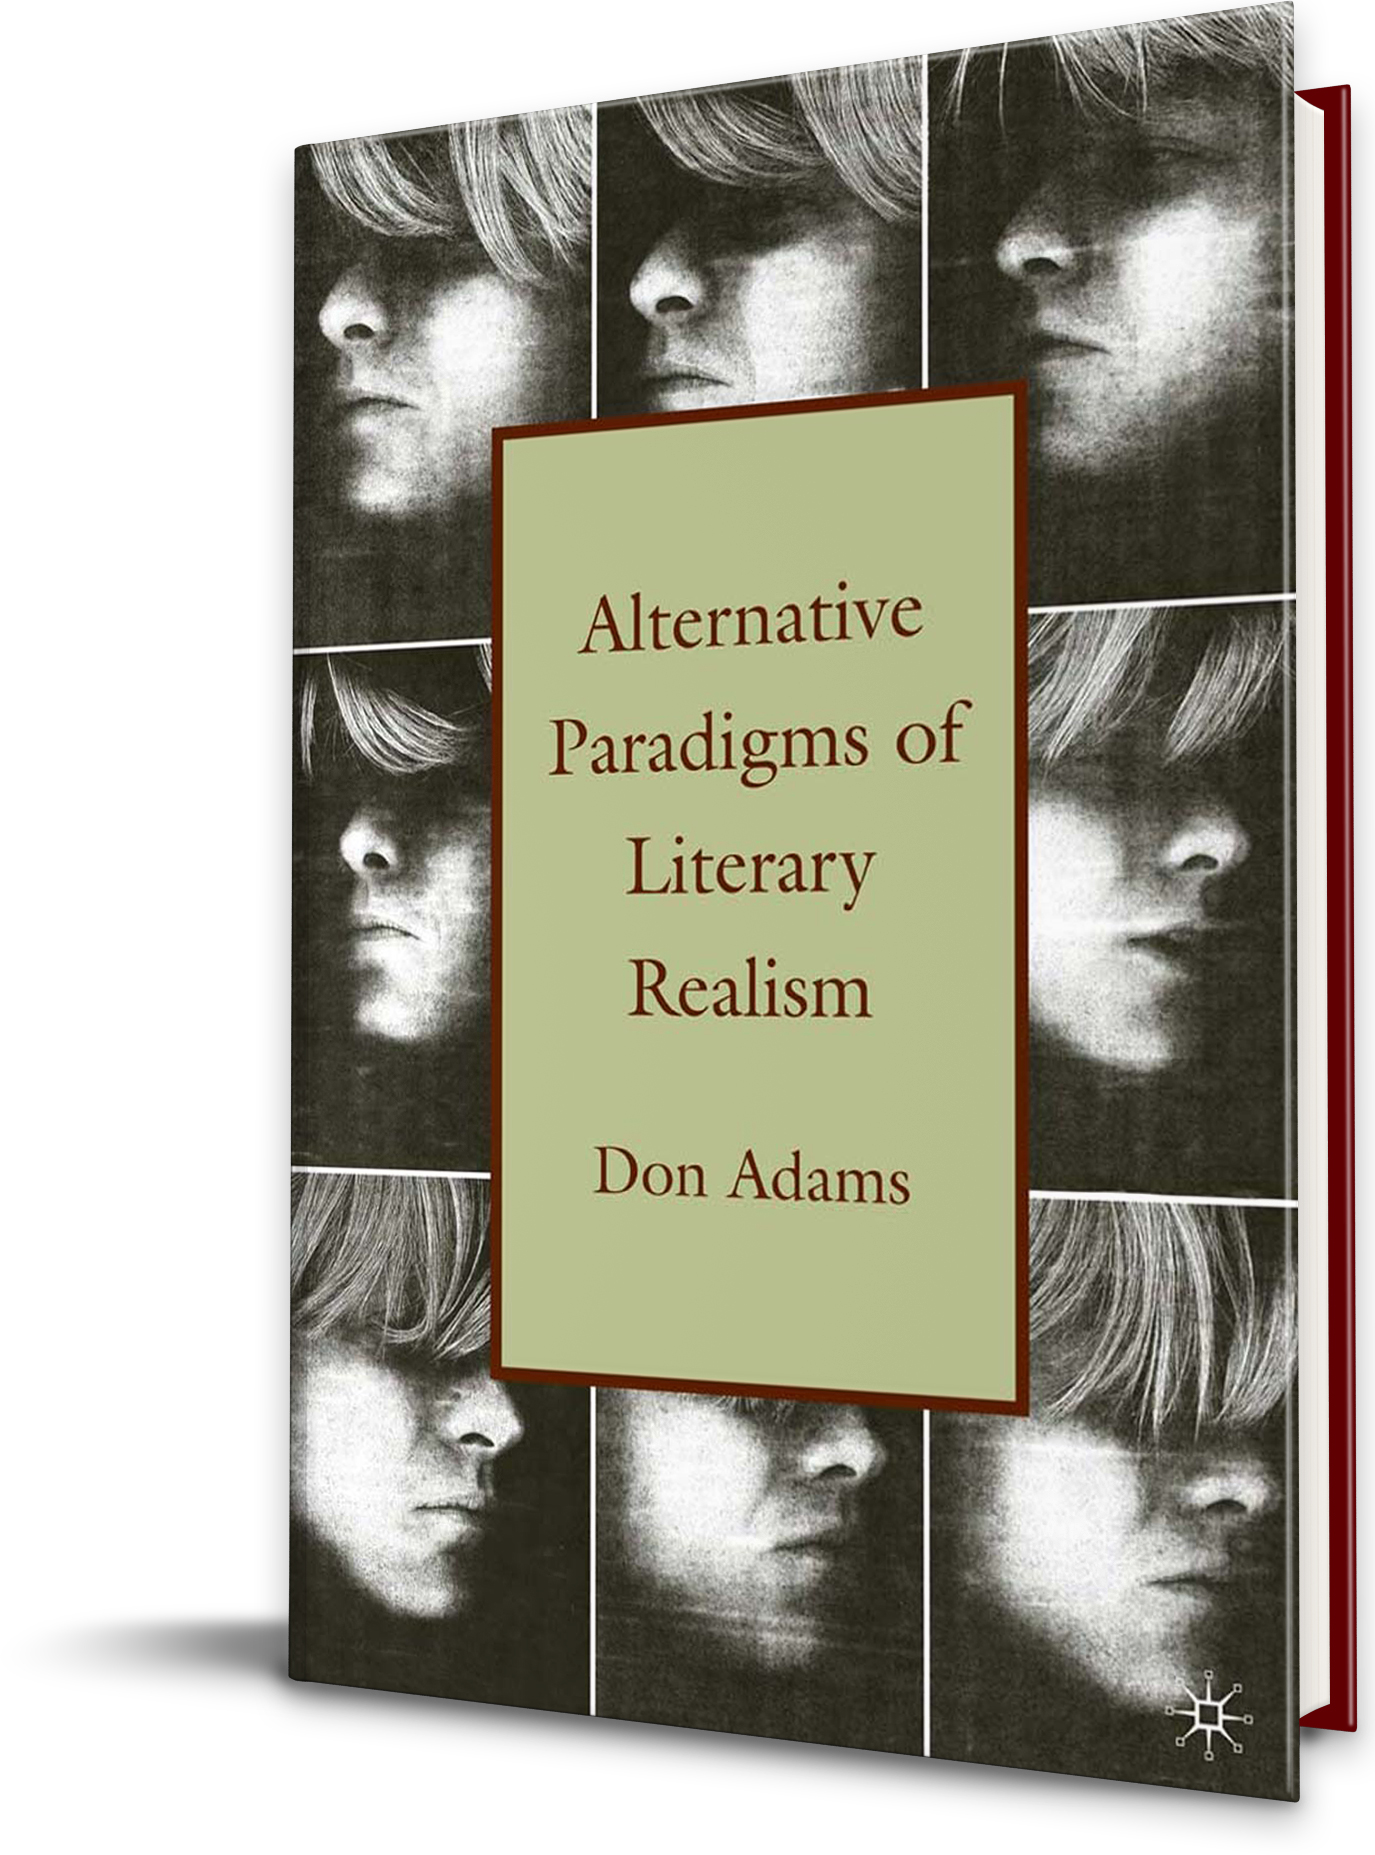 Alternative Paradigms of Literary Realism